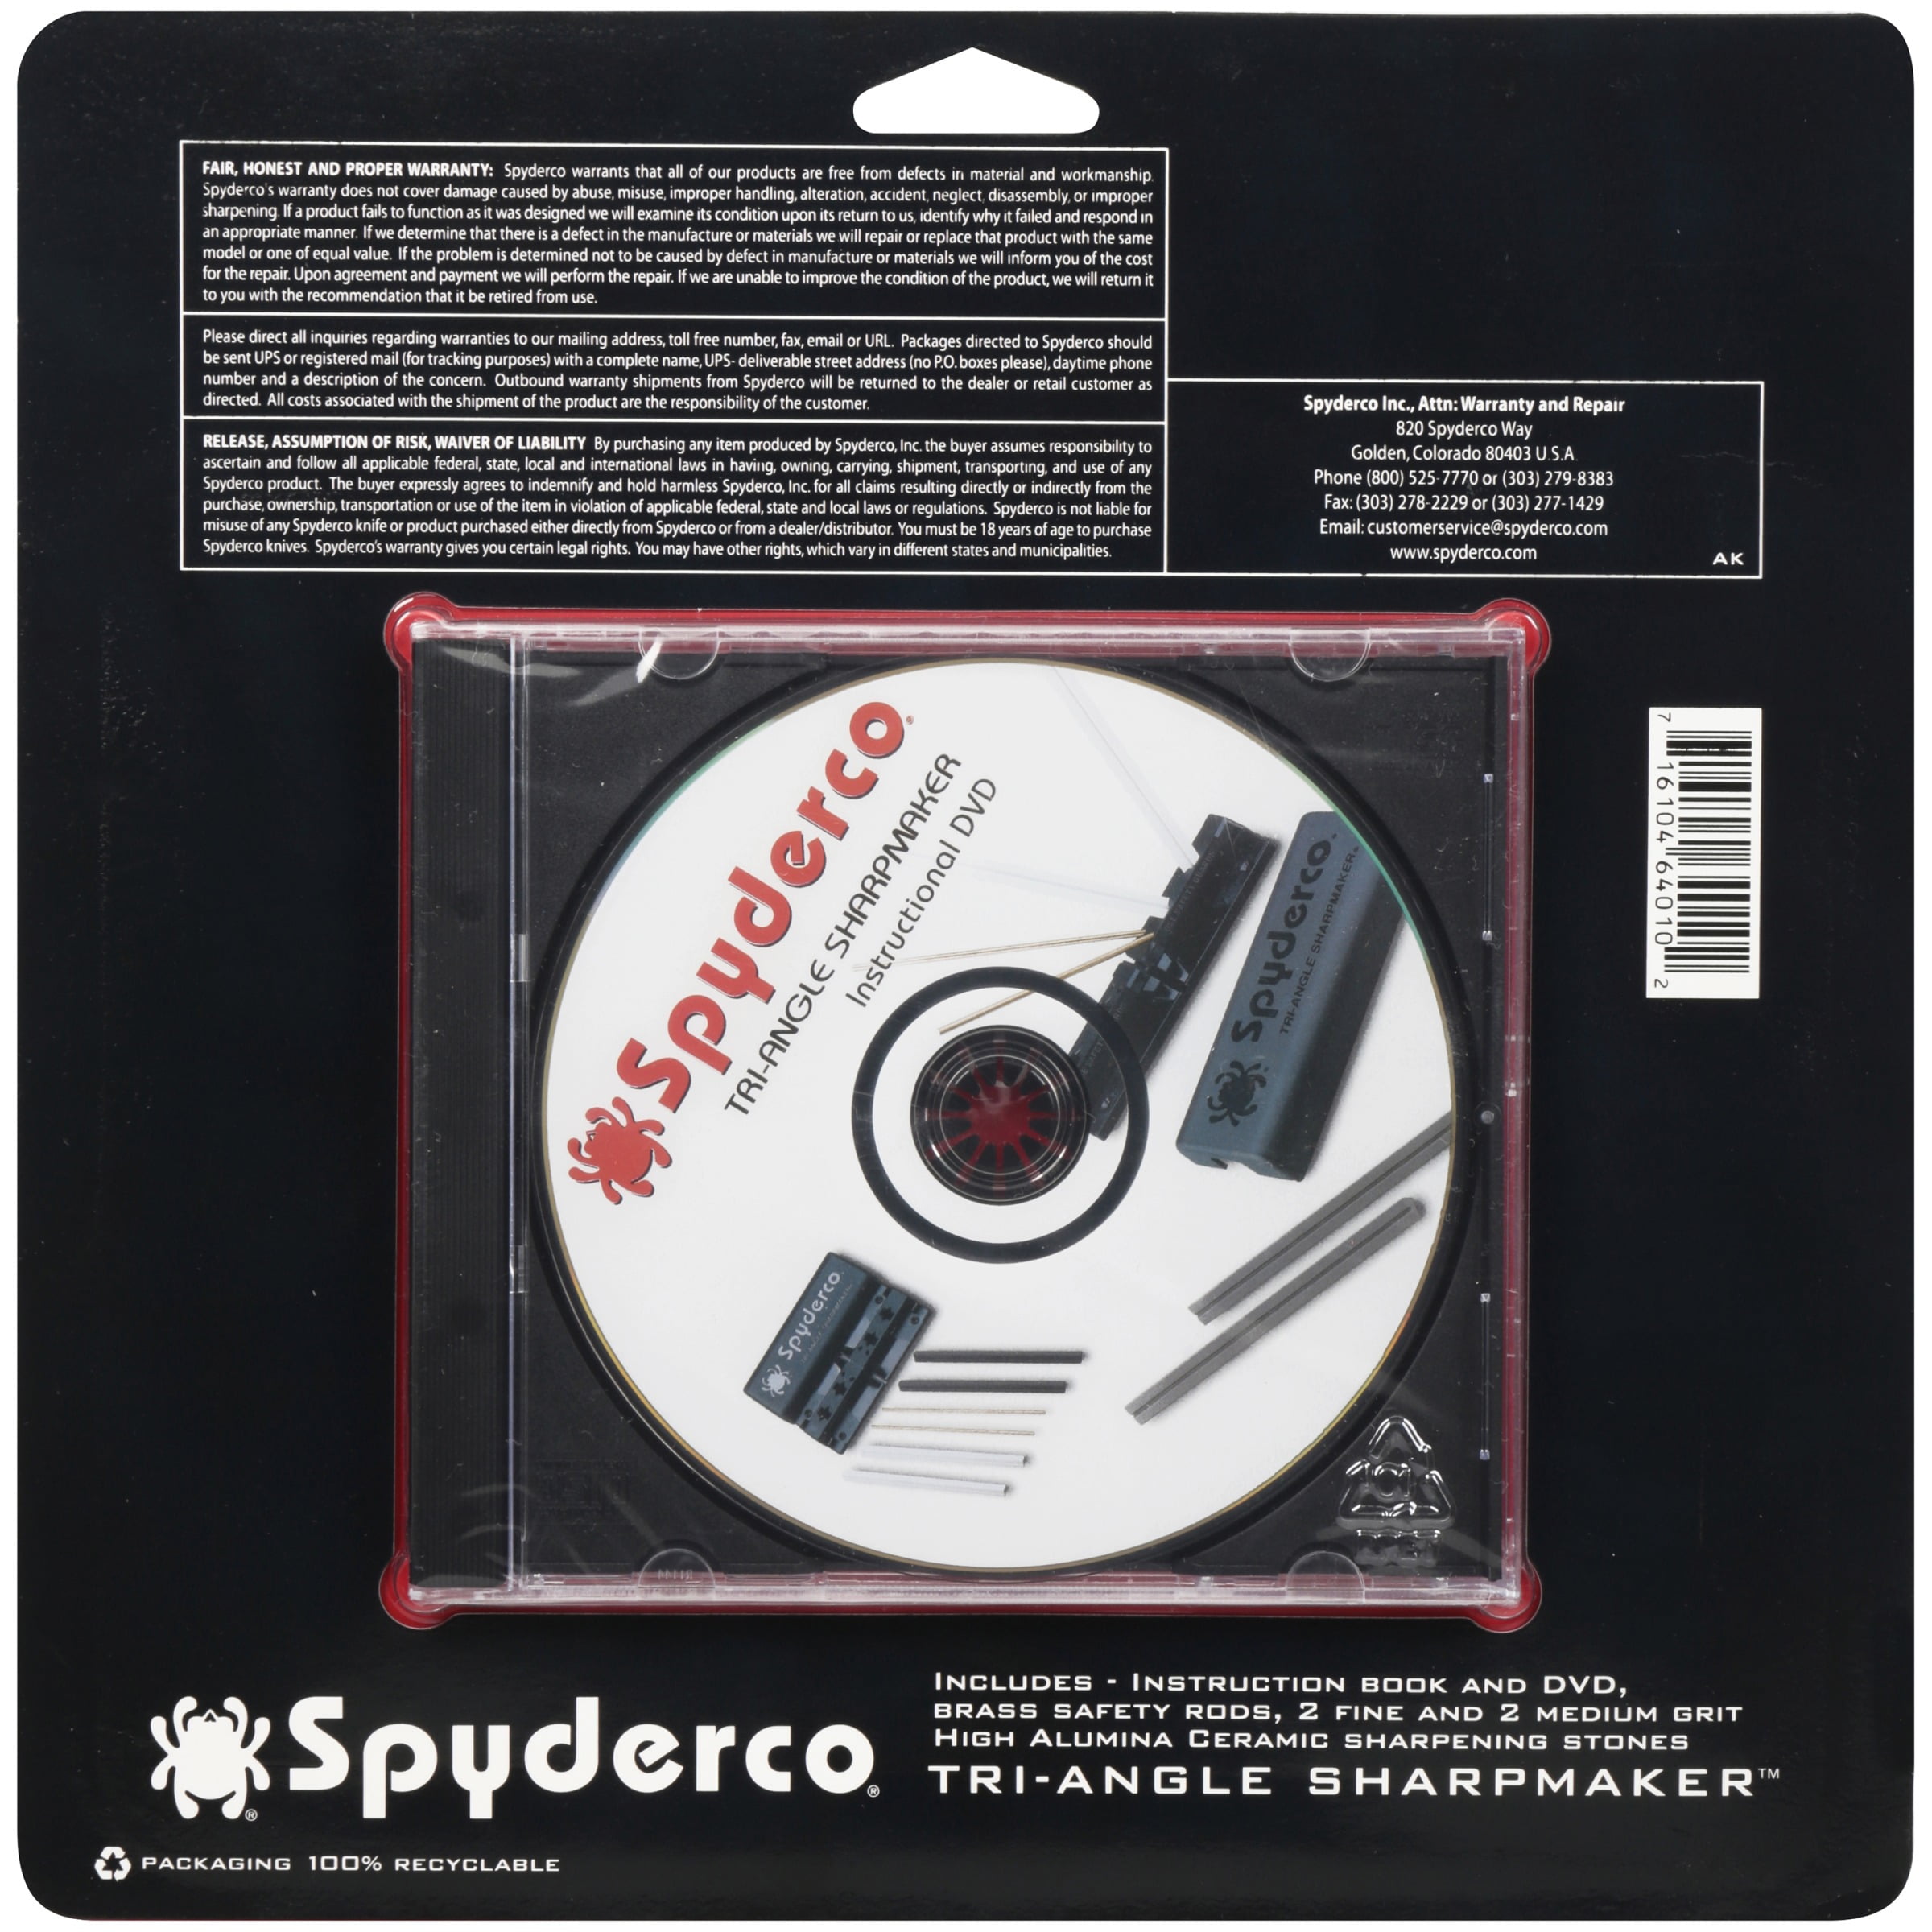 Sharpeners - Spyderco, Inc.